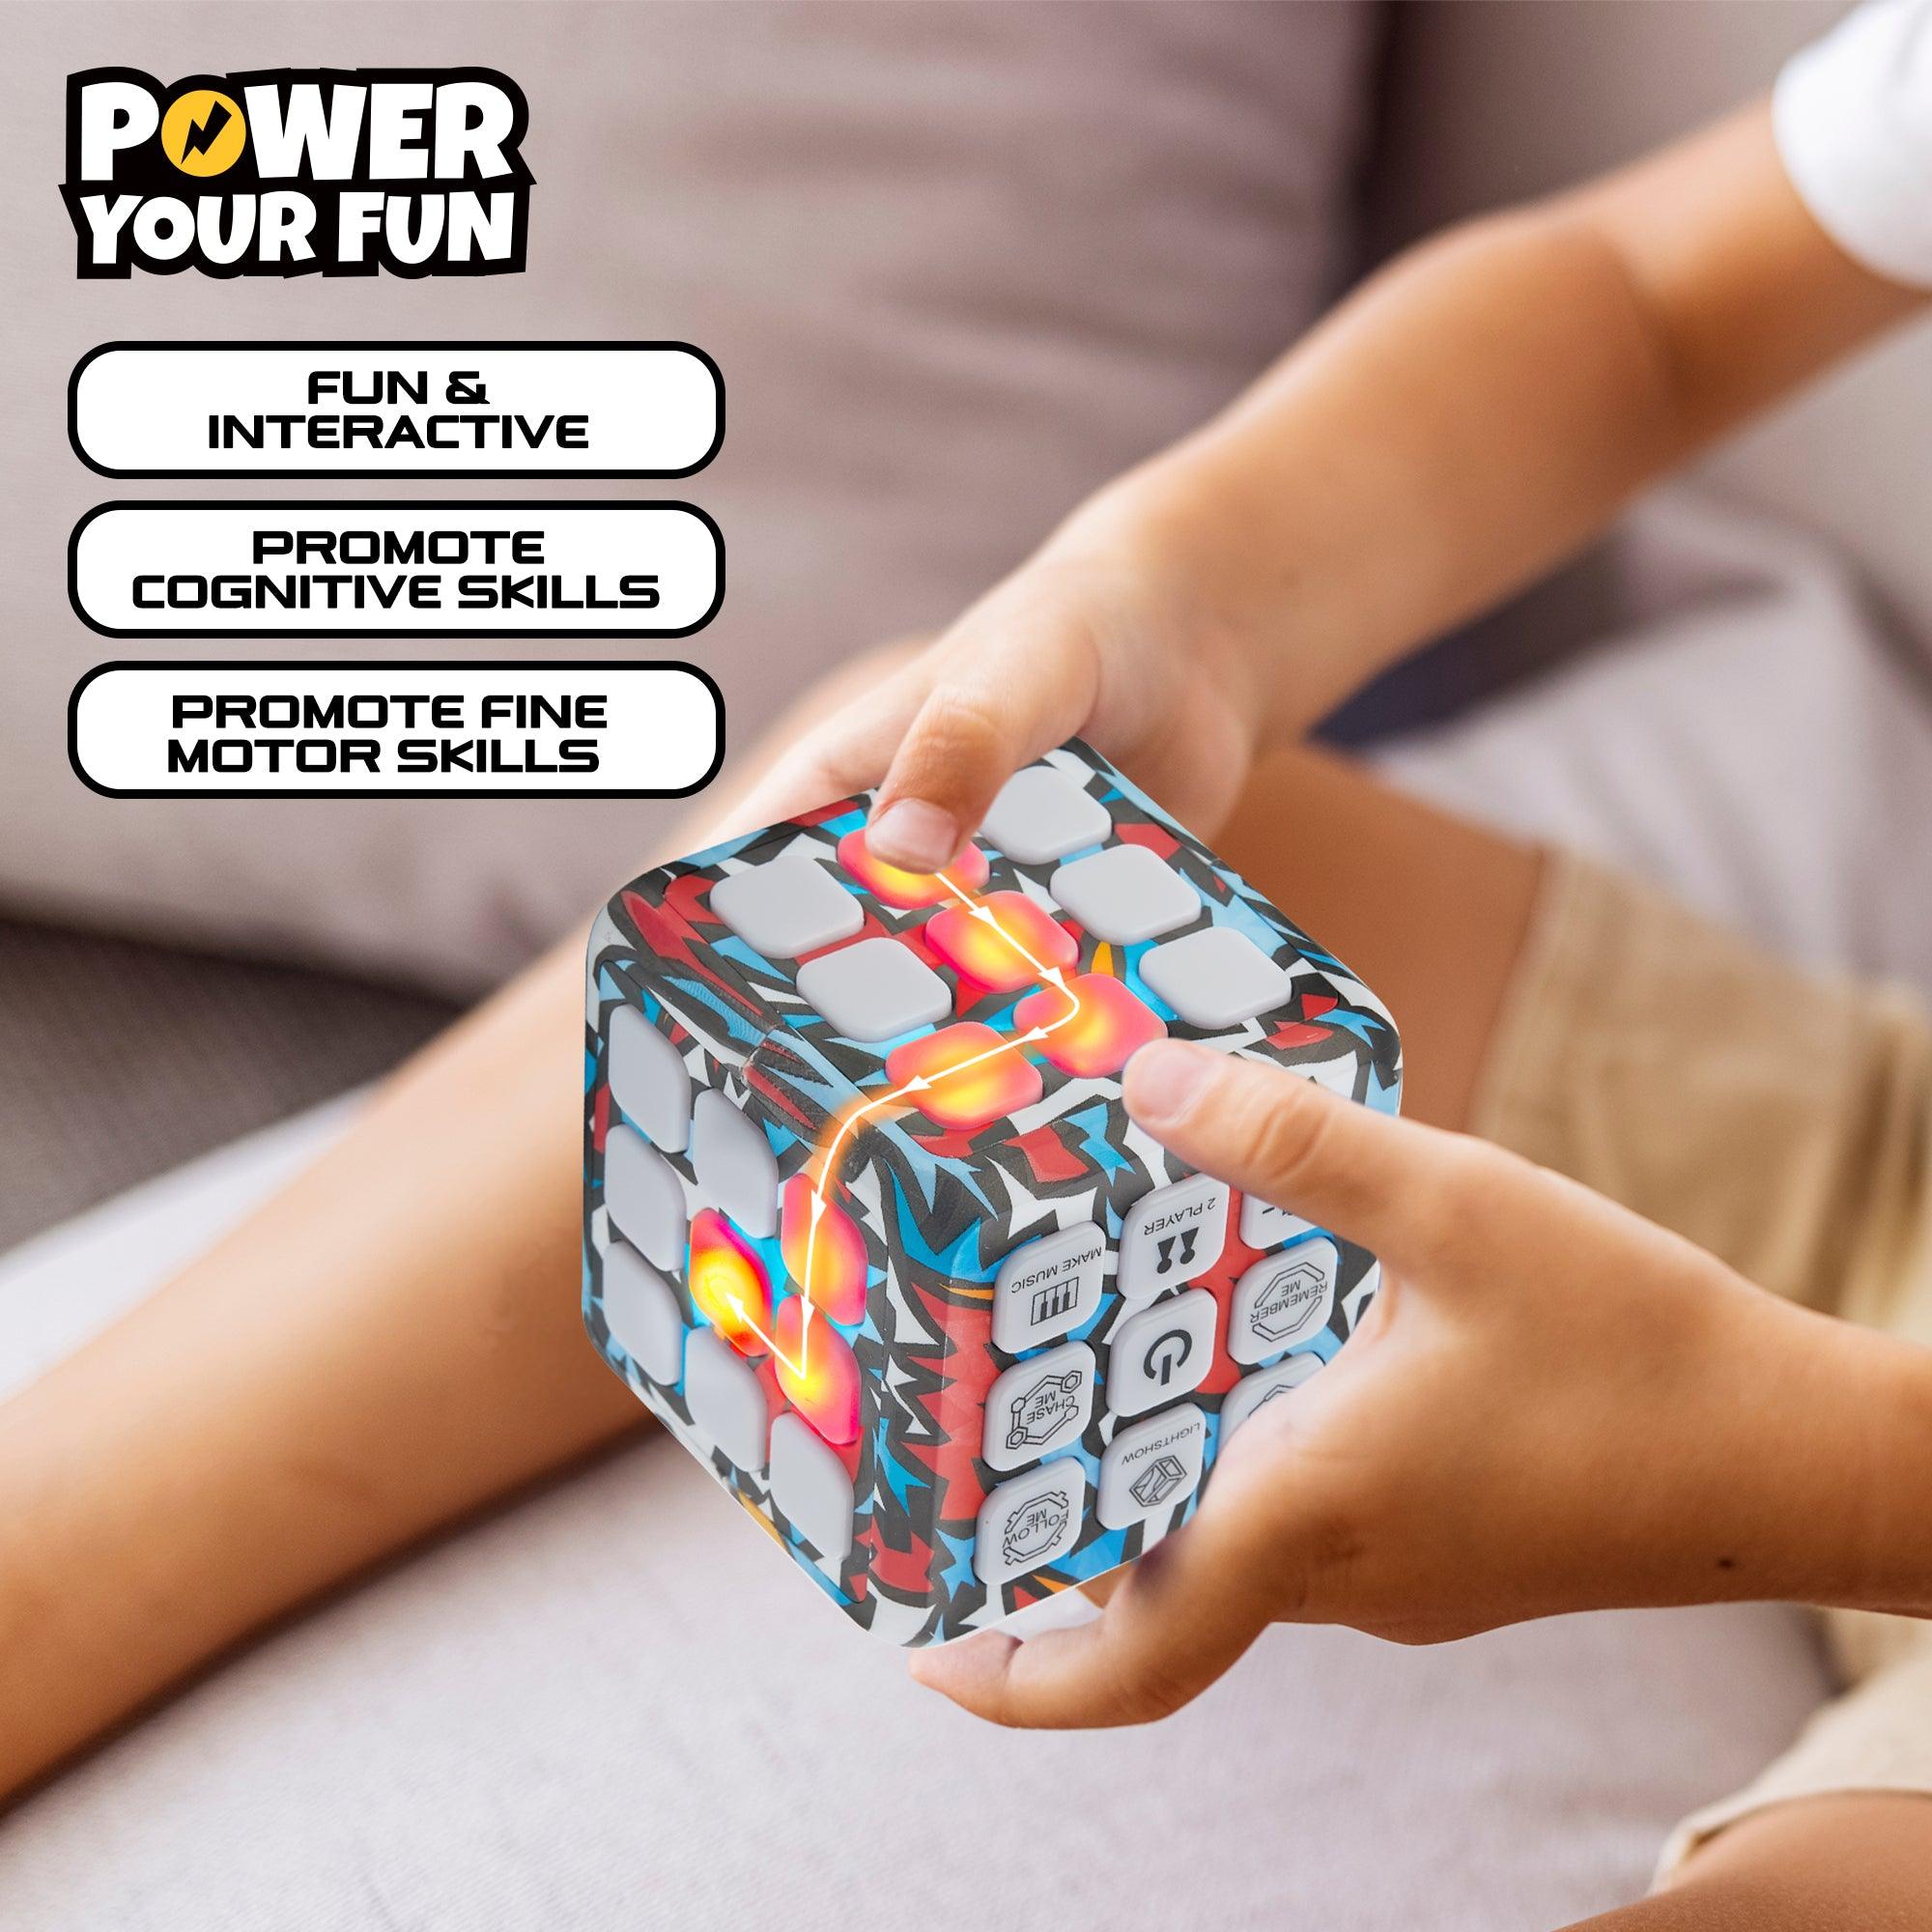 Cubik LED Flashing Cube Memory Game